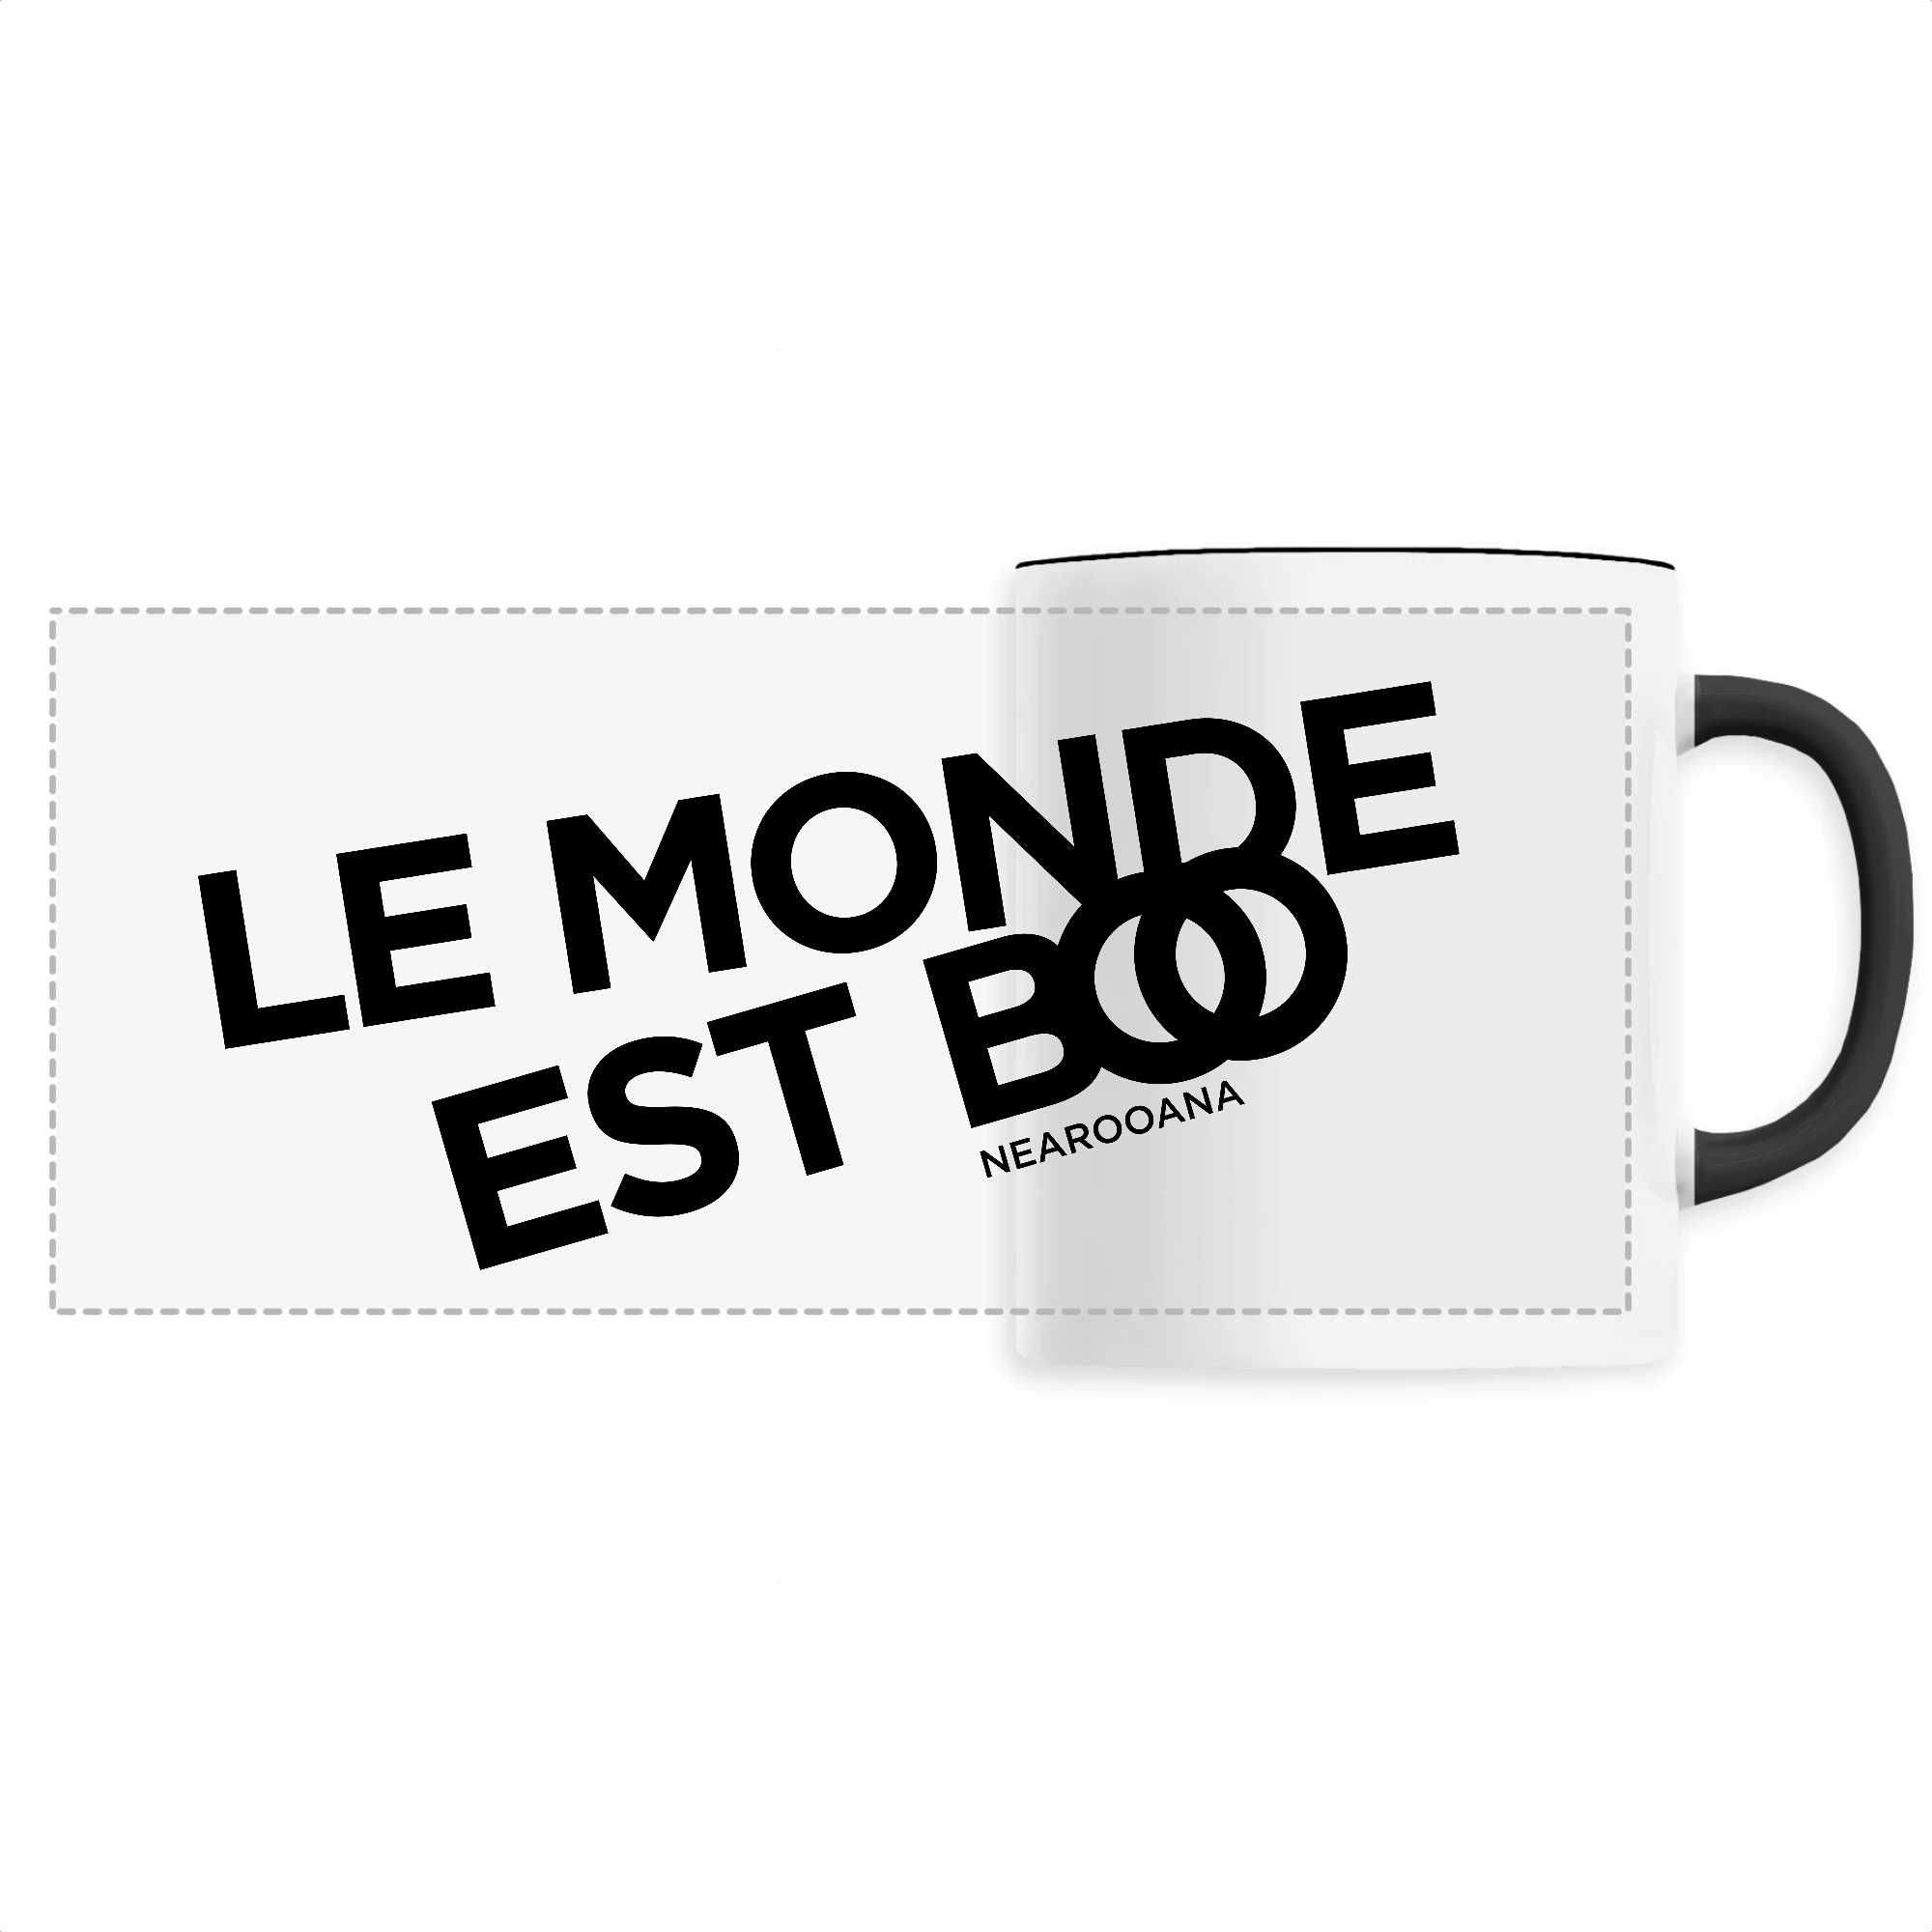 Mug Le Monde est BOO Nearooana